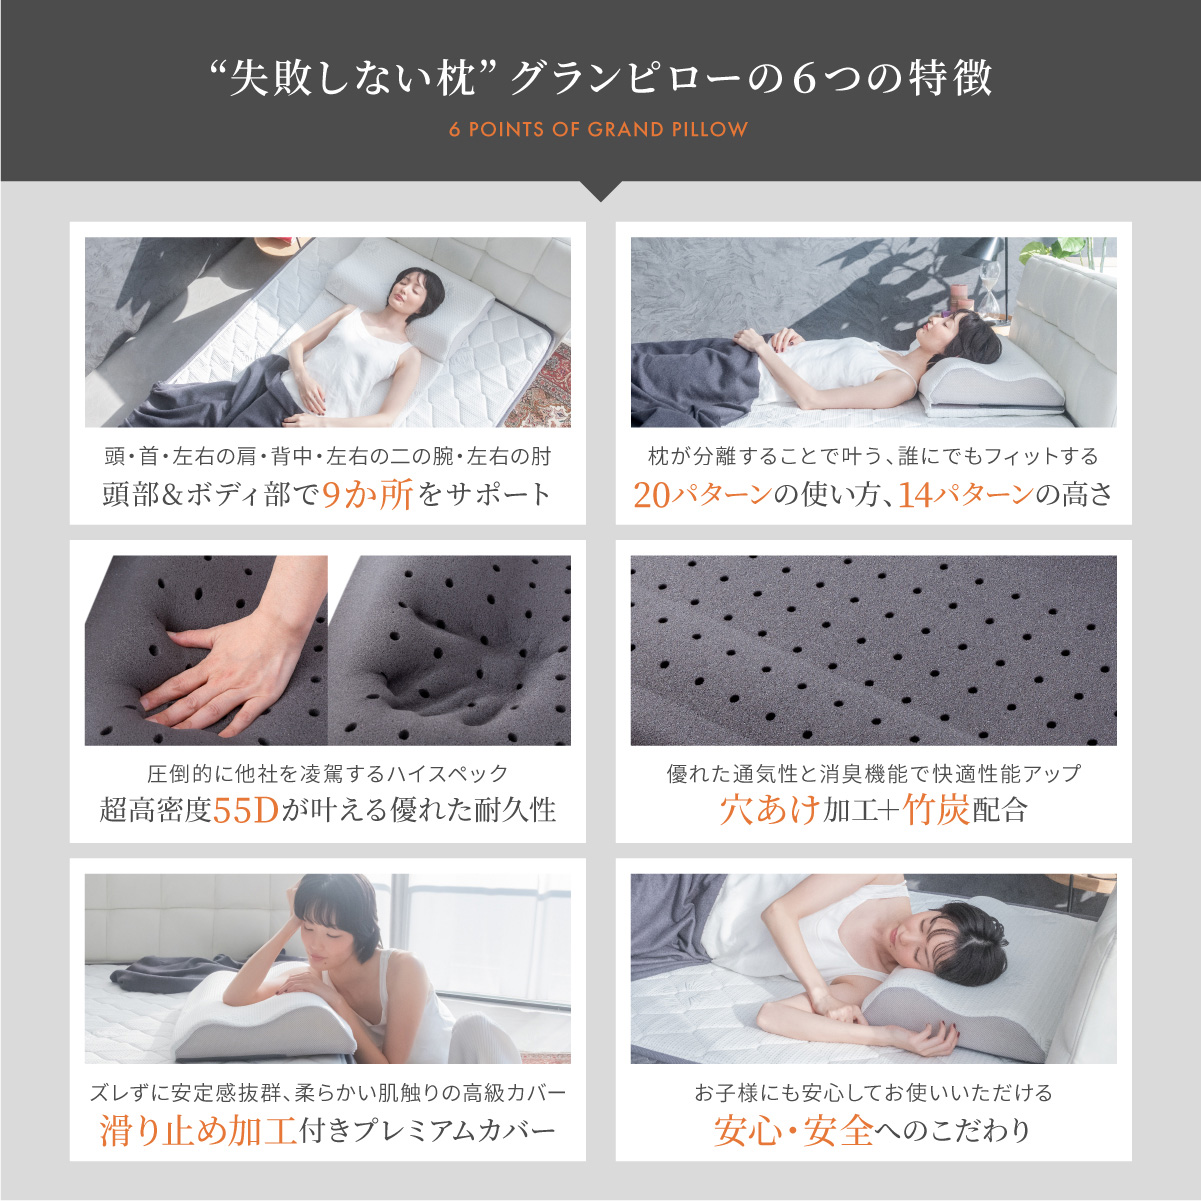 GOKUMIN Takumi 枕 グランピロー 低反発枕 20パターンの寝心地 まくら 大きめ 低反発 横向き 仰向き 安眠 安眠枕 快眠 快眠枕  熟睡枕 肩こり ストレートネック